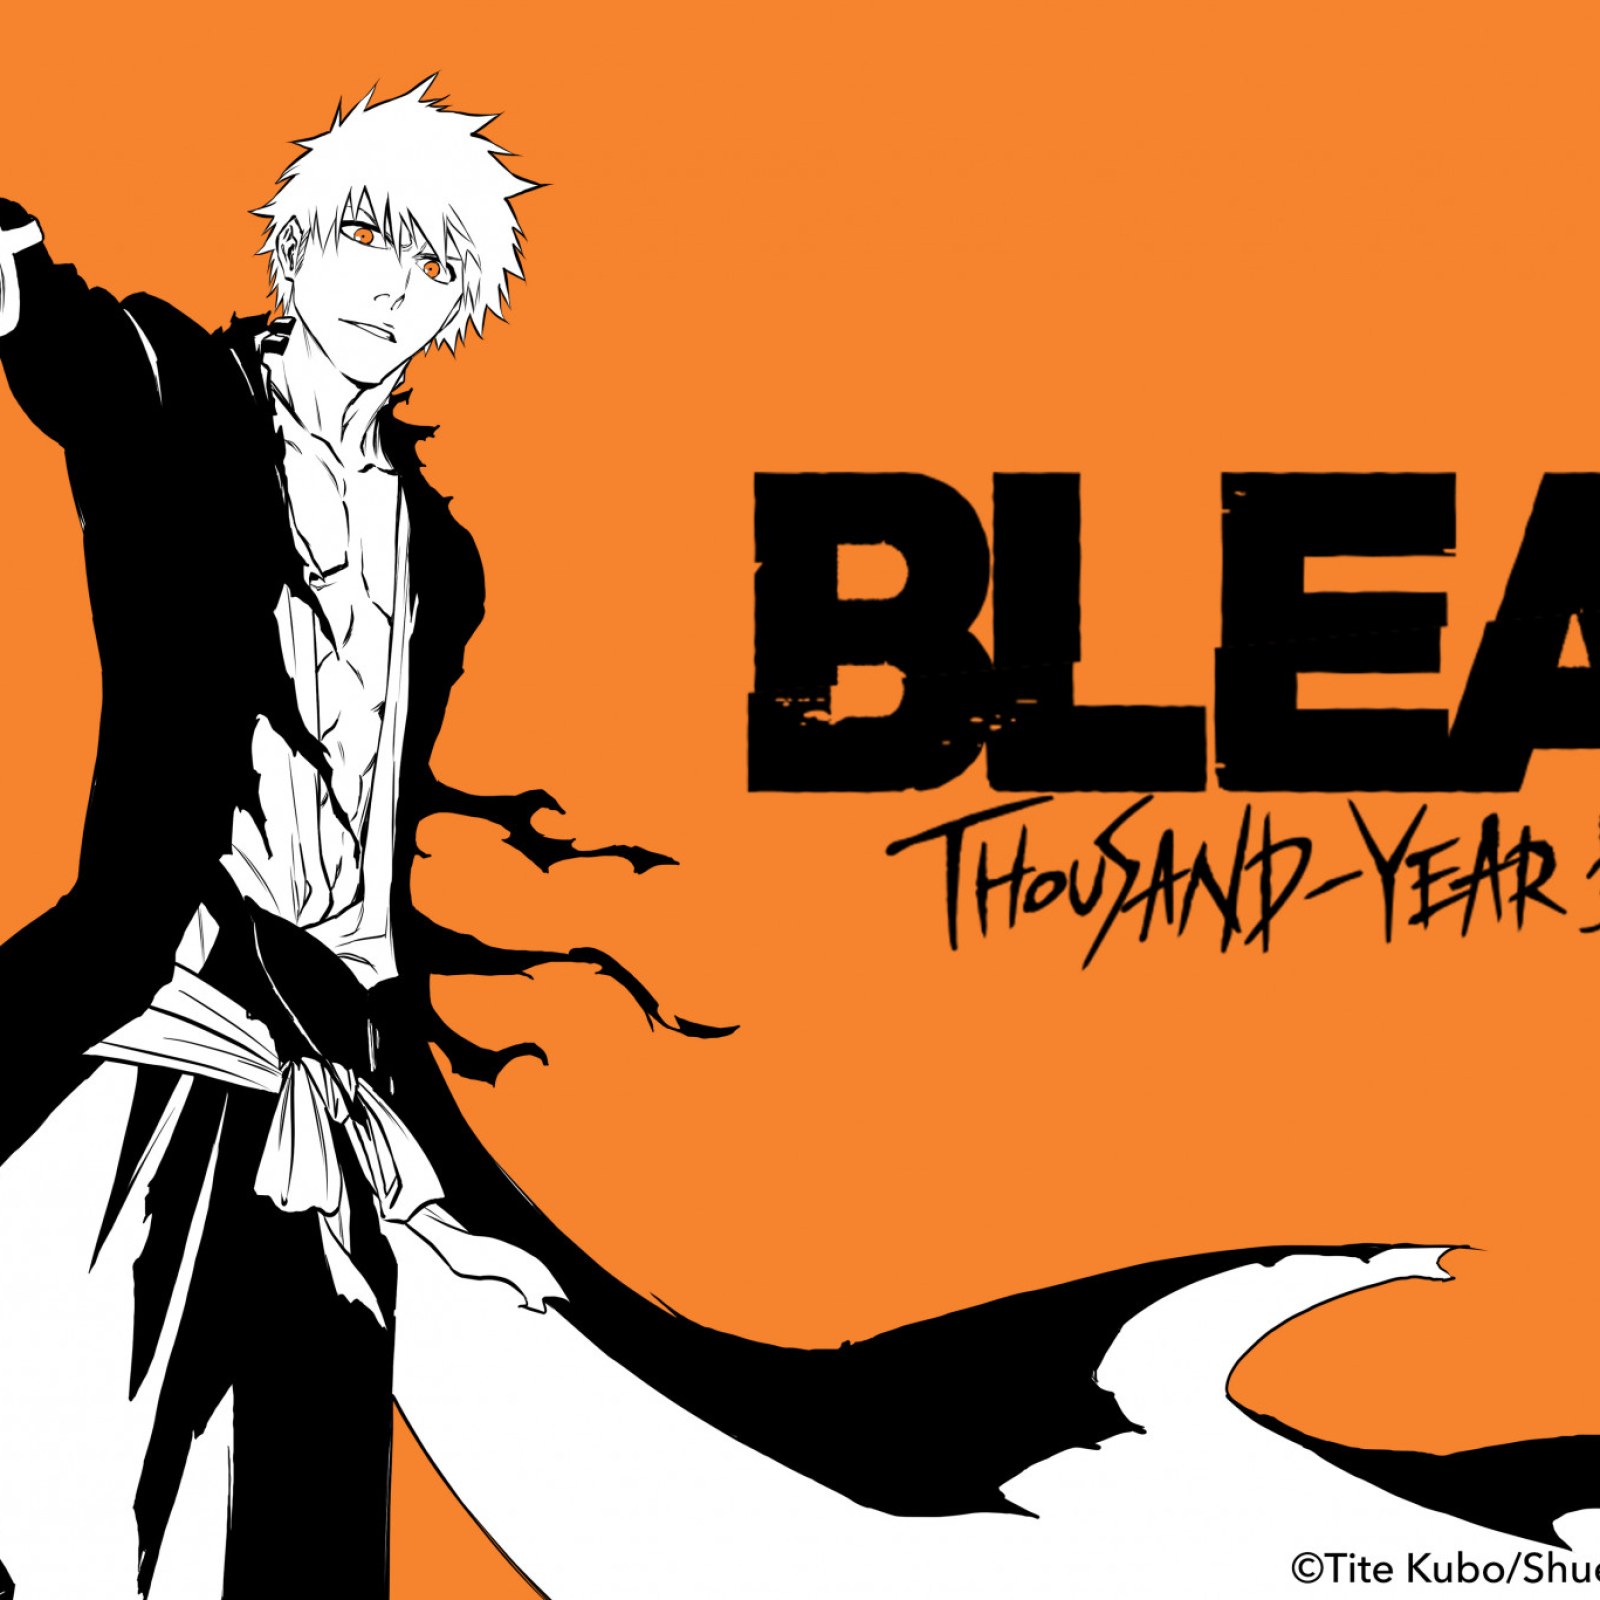 Bleach: Thousand-Year Blood War Anime Adaptation Gets Release Date